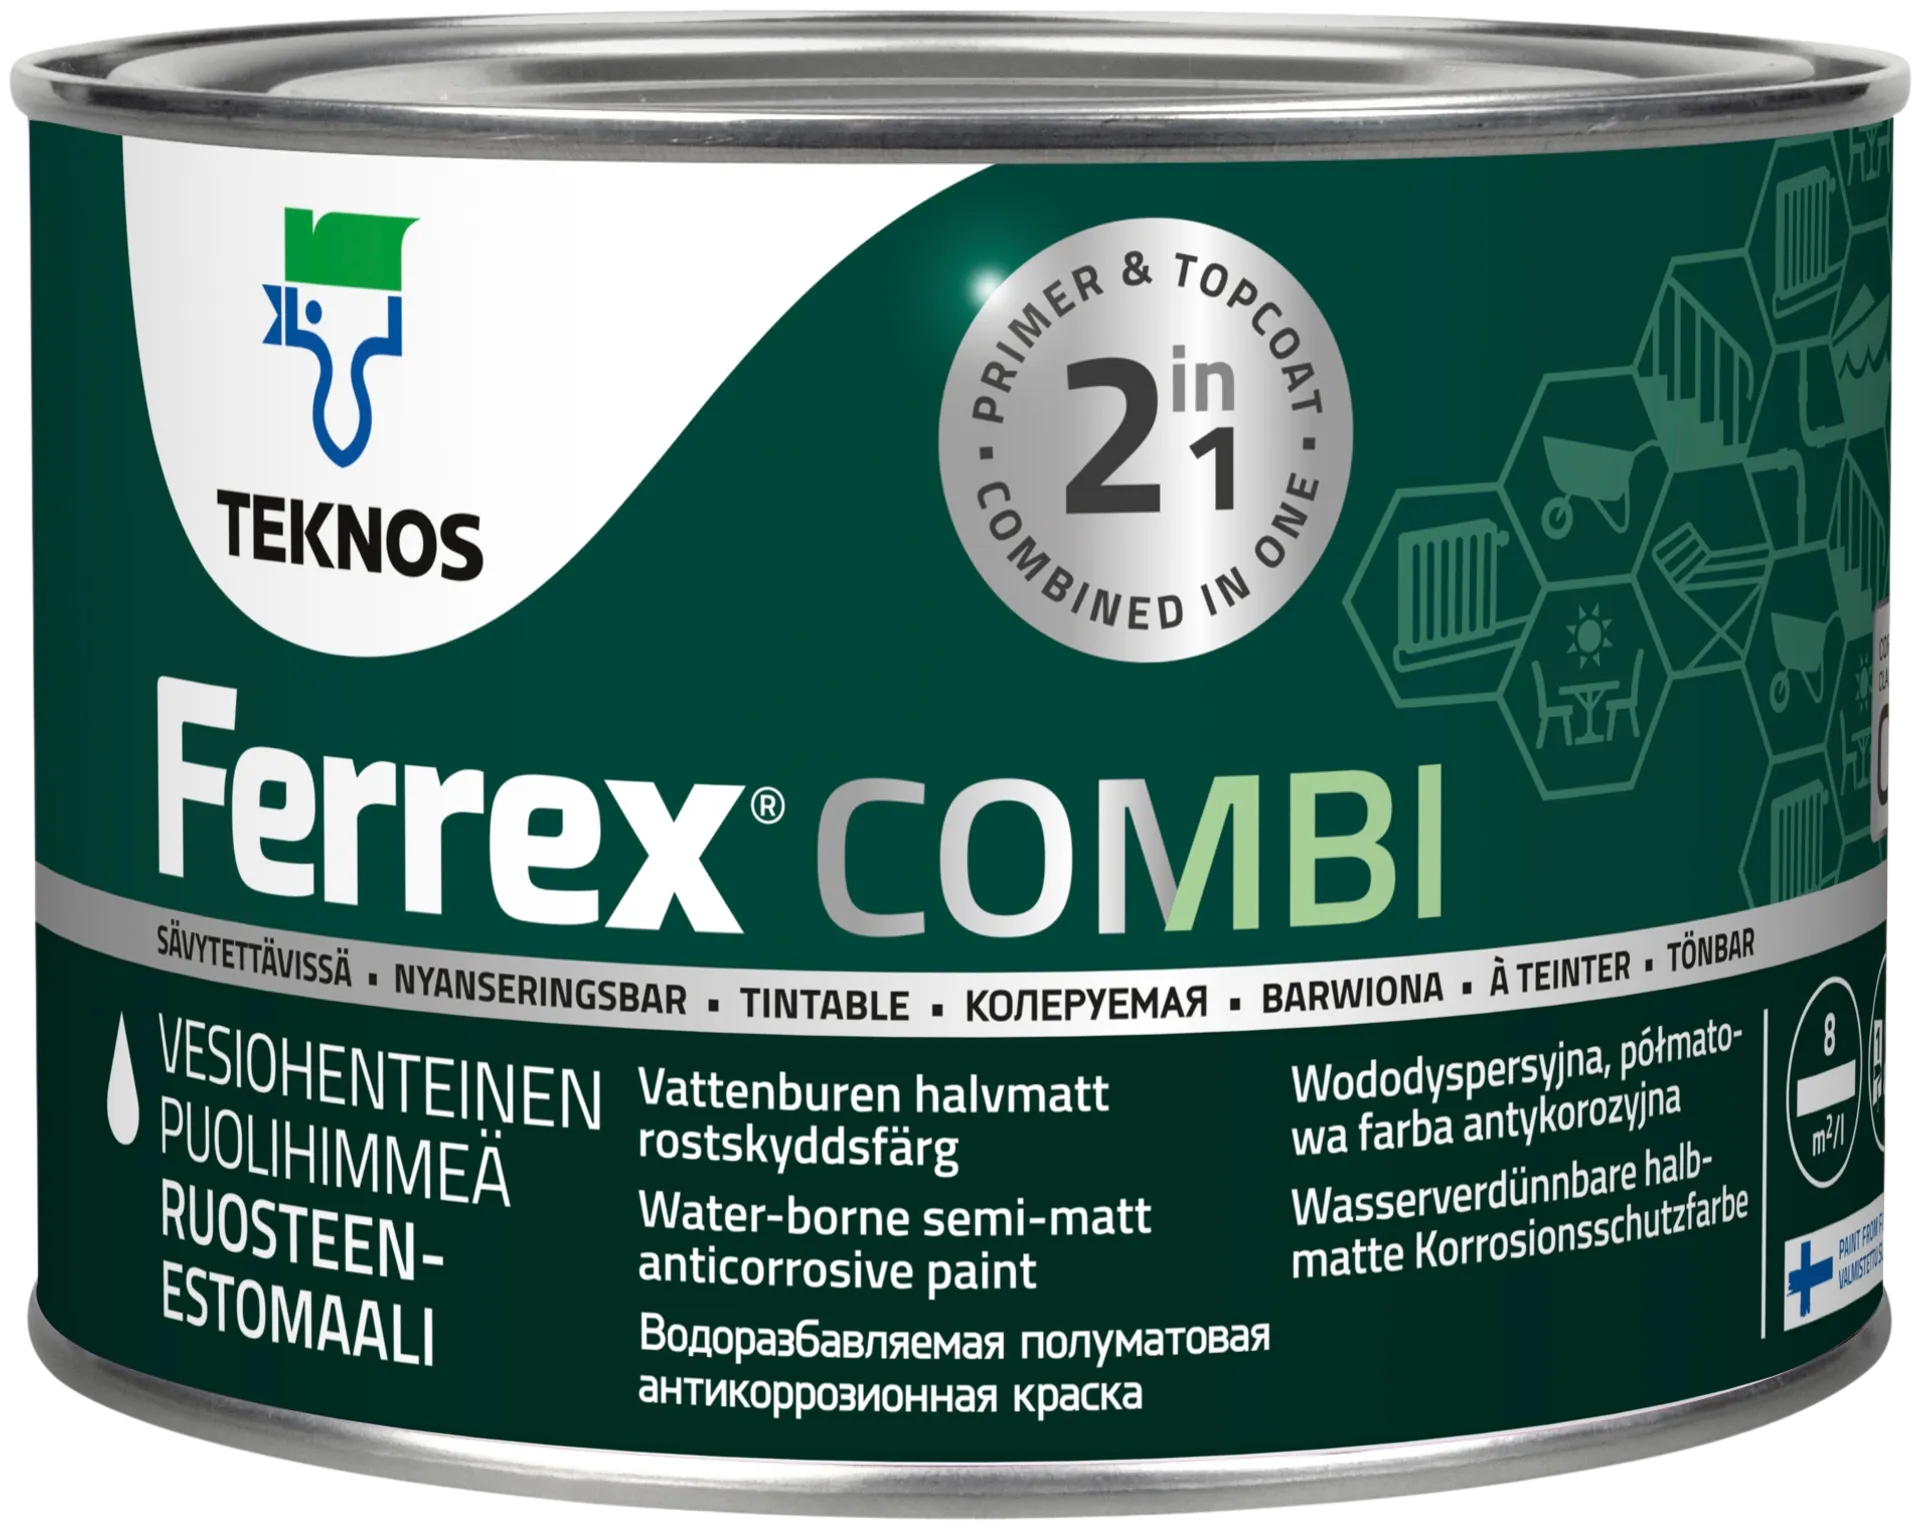 Teknos Ferrex Combi ruosteenestomaali 0,5l musta